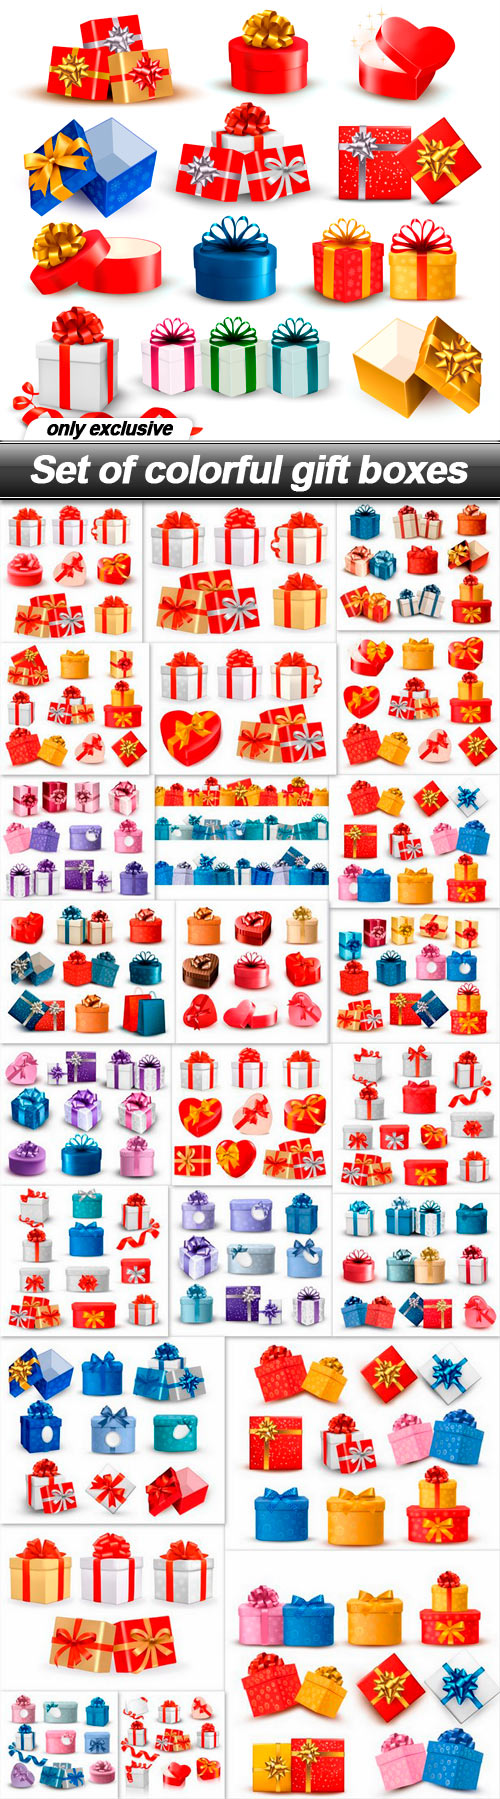 Set of colorful gift boxes - 25 UHQ JPEG